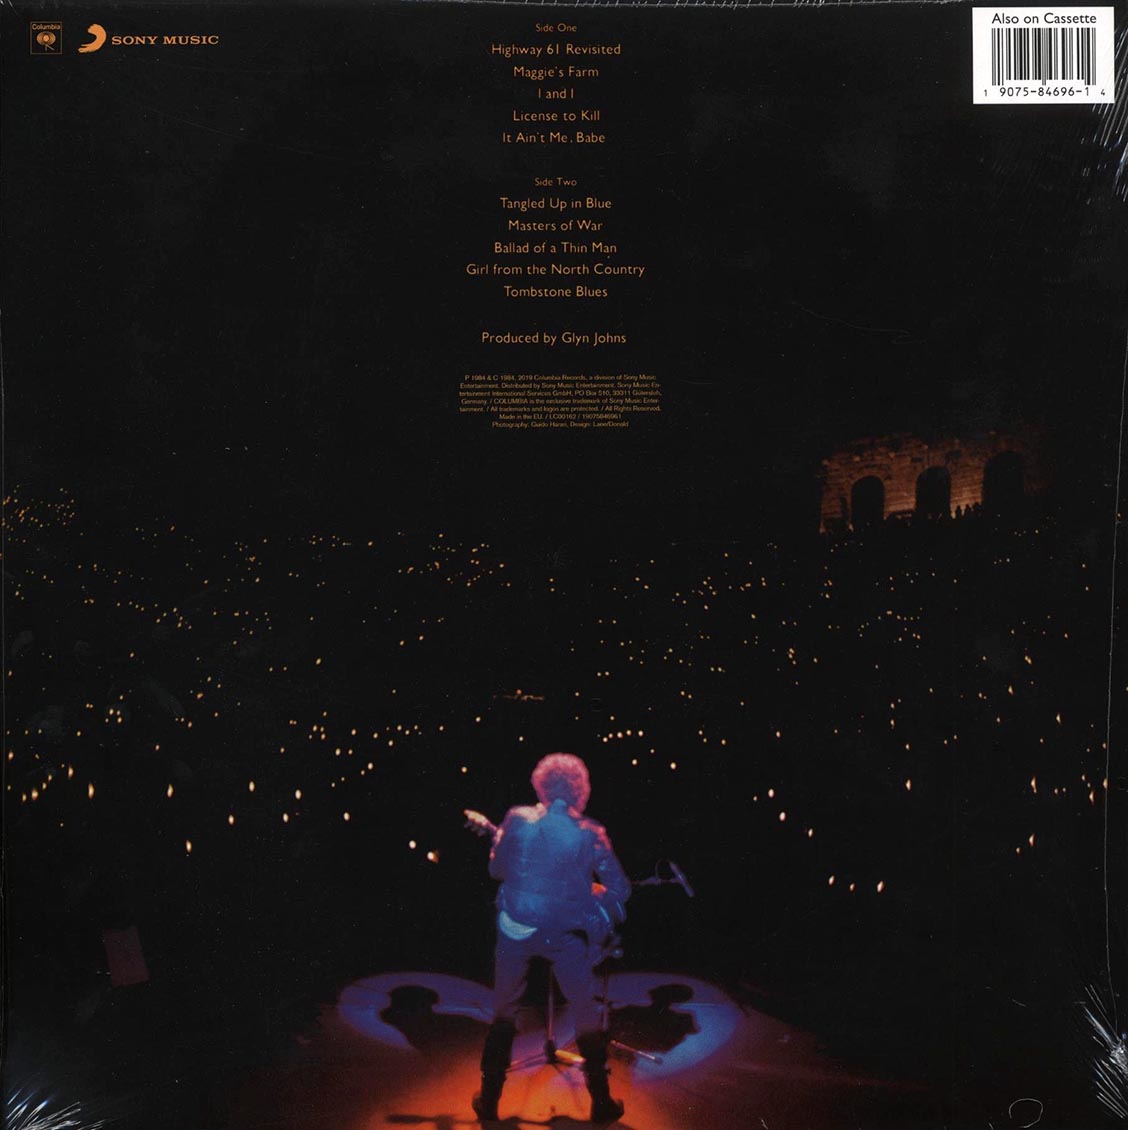 Bob Dylan - Real Live [2019 Reissue] [New Vinyl Record LP]